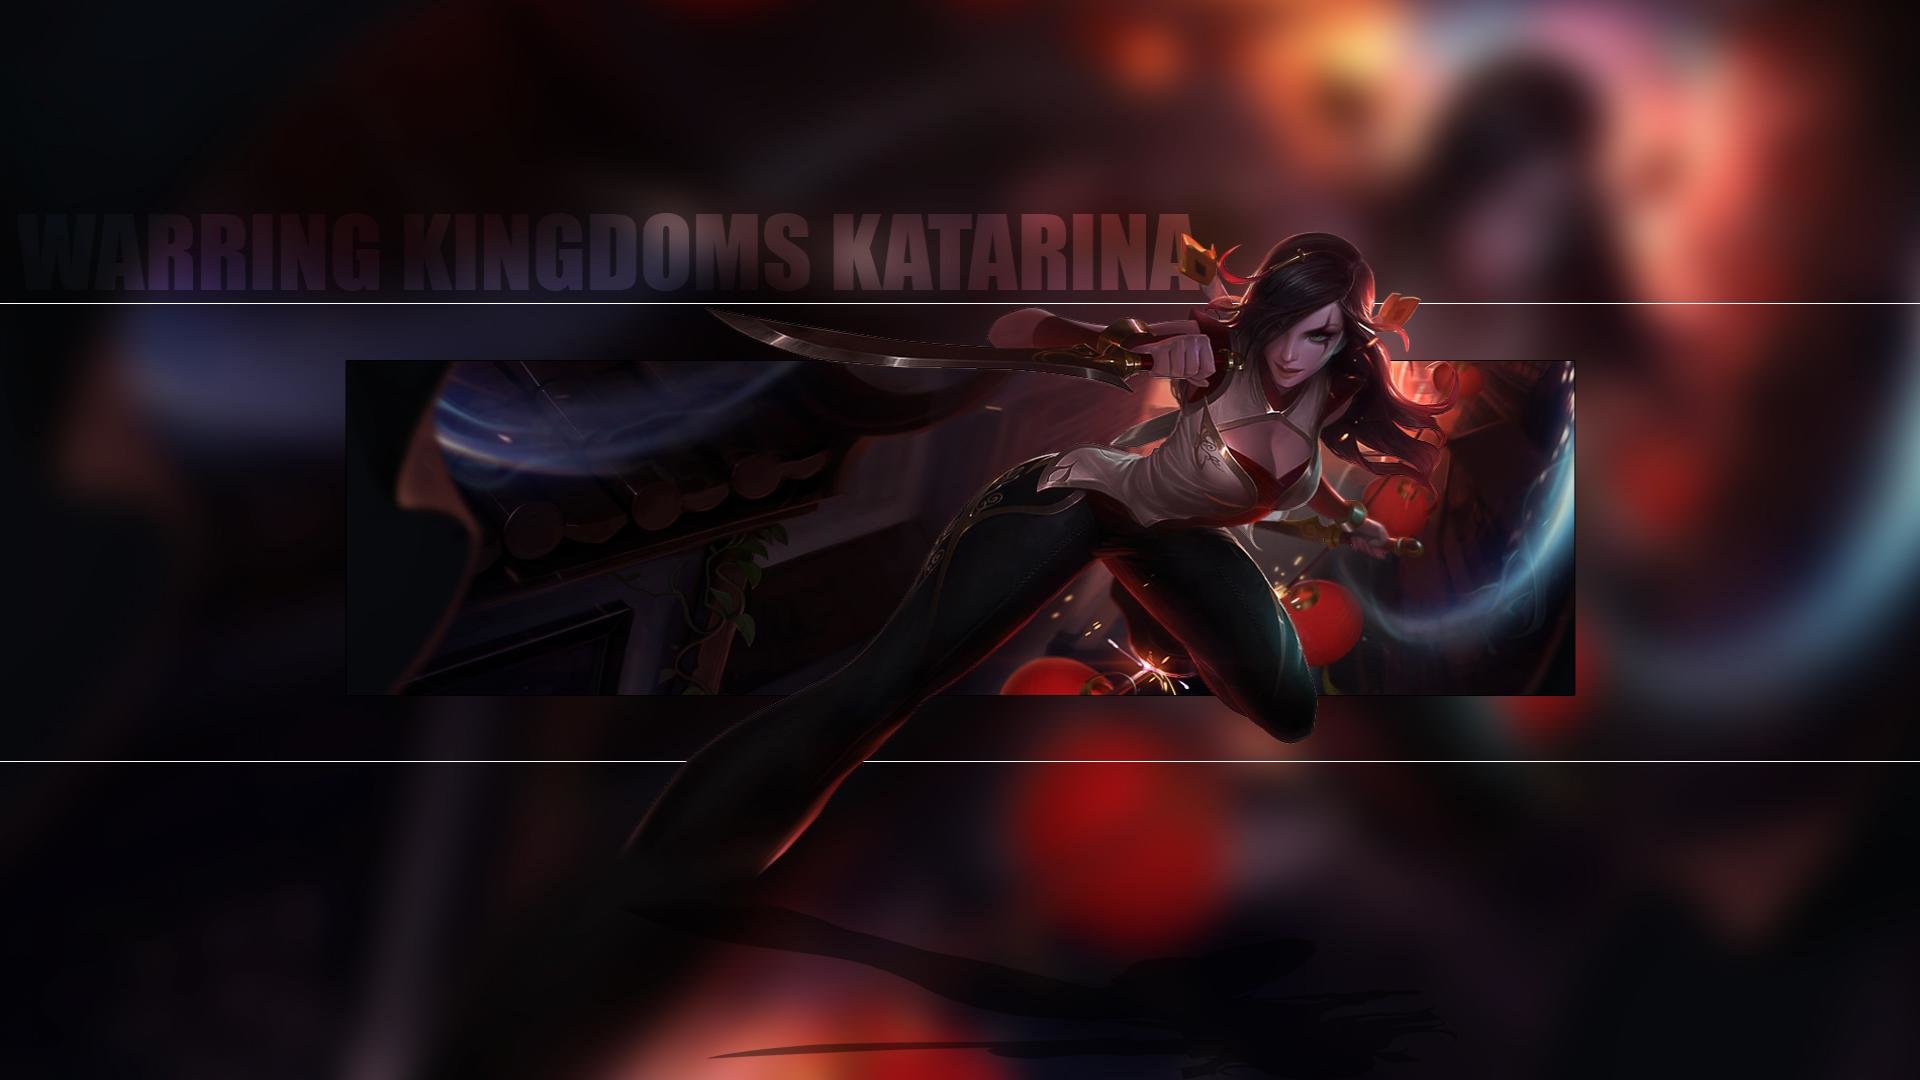 Free Katarina (League Of Legends) high quality wallpaper ID:172011 for hd 1920x1080 desktop